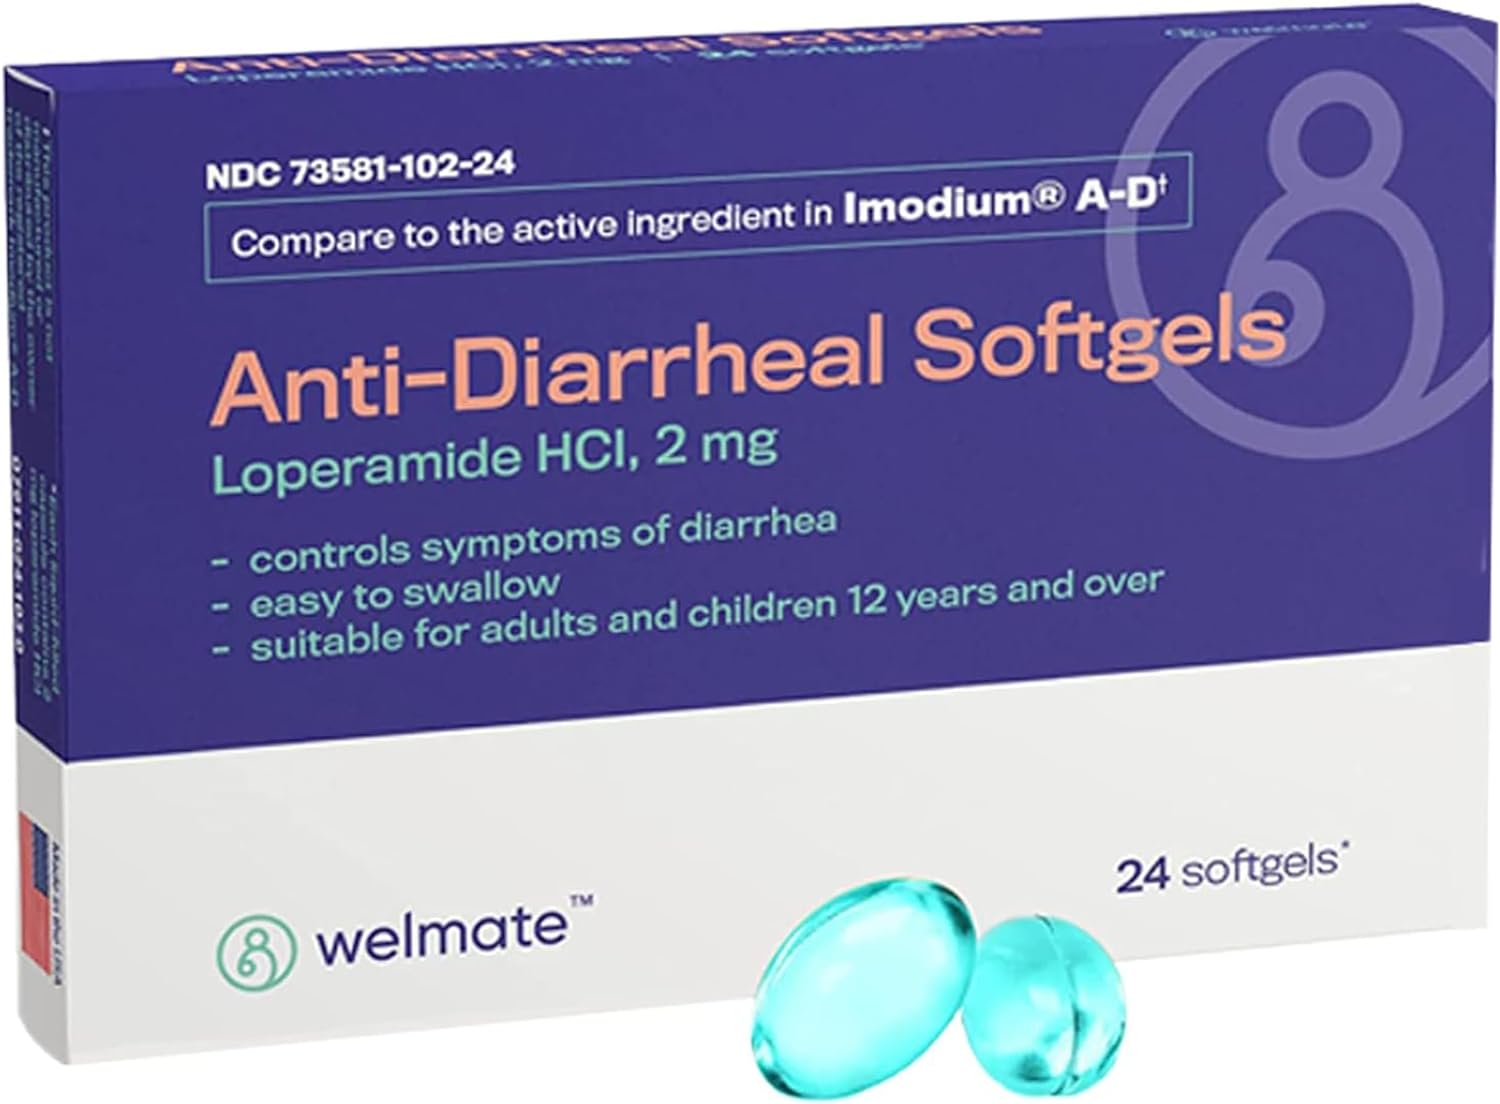 Welmate Anti-Diarrheal Sotfgels - Loperamide HCL 2 mg - Diarrhea Relief - 24 Count Blister Pack - image 1 of 6